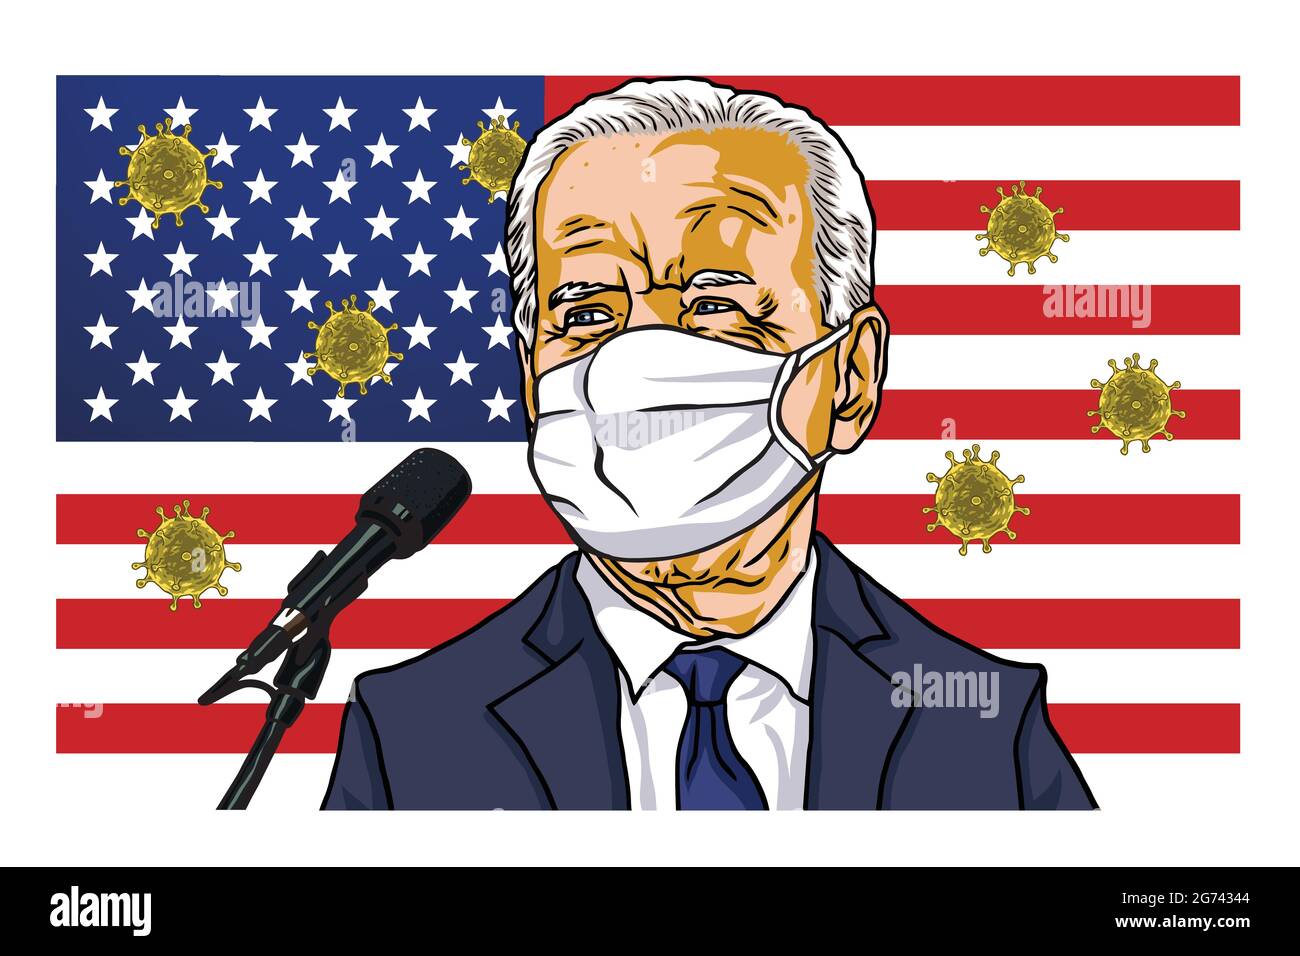 Joe Biden Campaign Presidential Election Debate Speech Cartoon Caricature Vector Illustration with American Flag Background. Washington, 29 October 20 Stock Vector